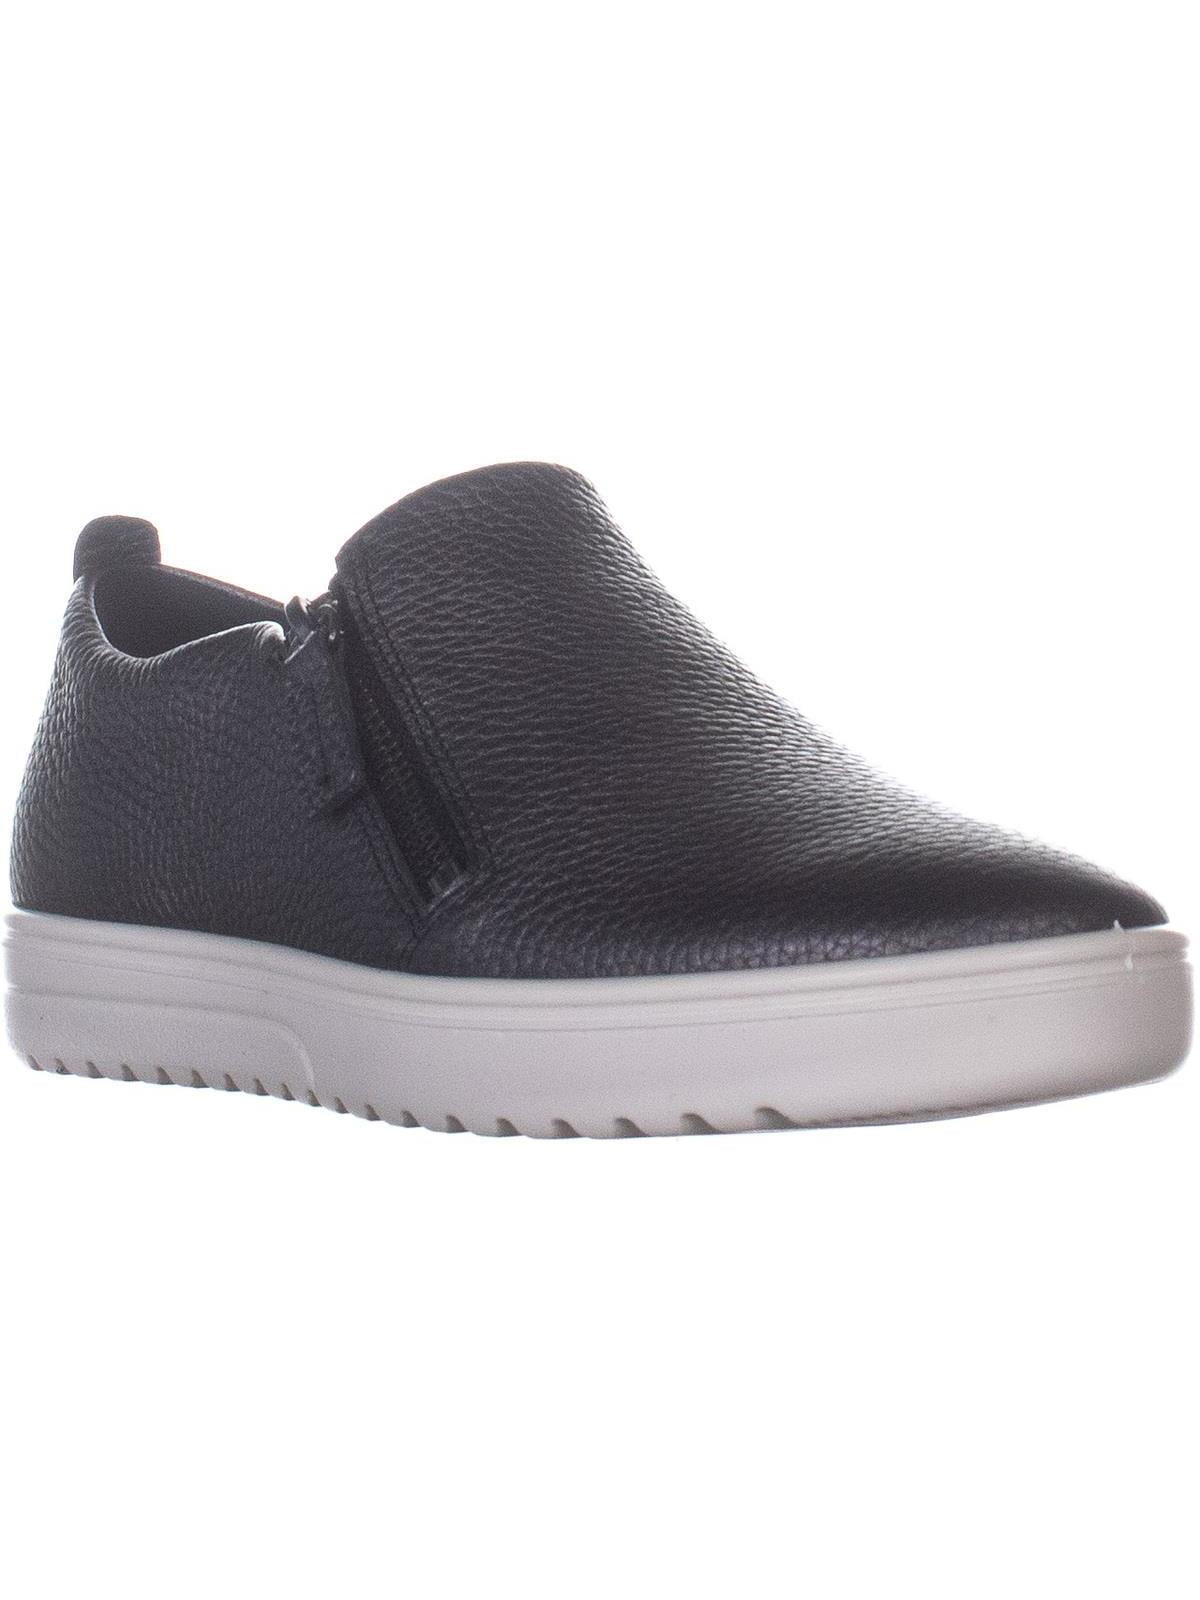 Womens ECCO Footwear Fara Slip-On Loafers, Black/Dark Silver - Walmart.com